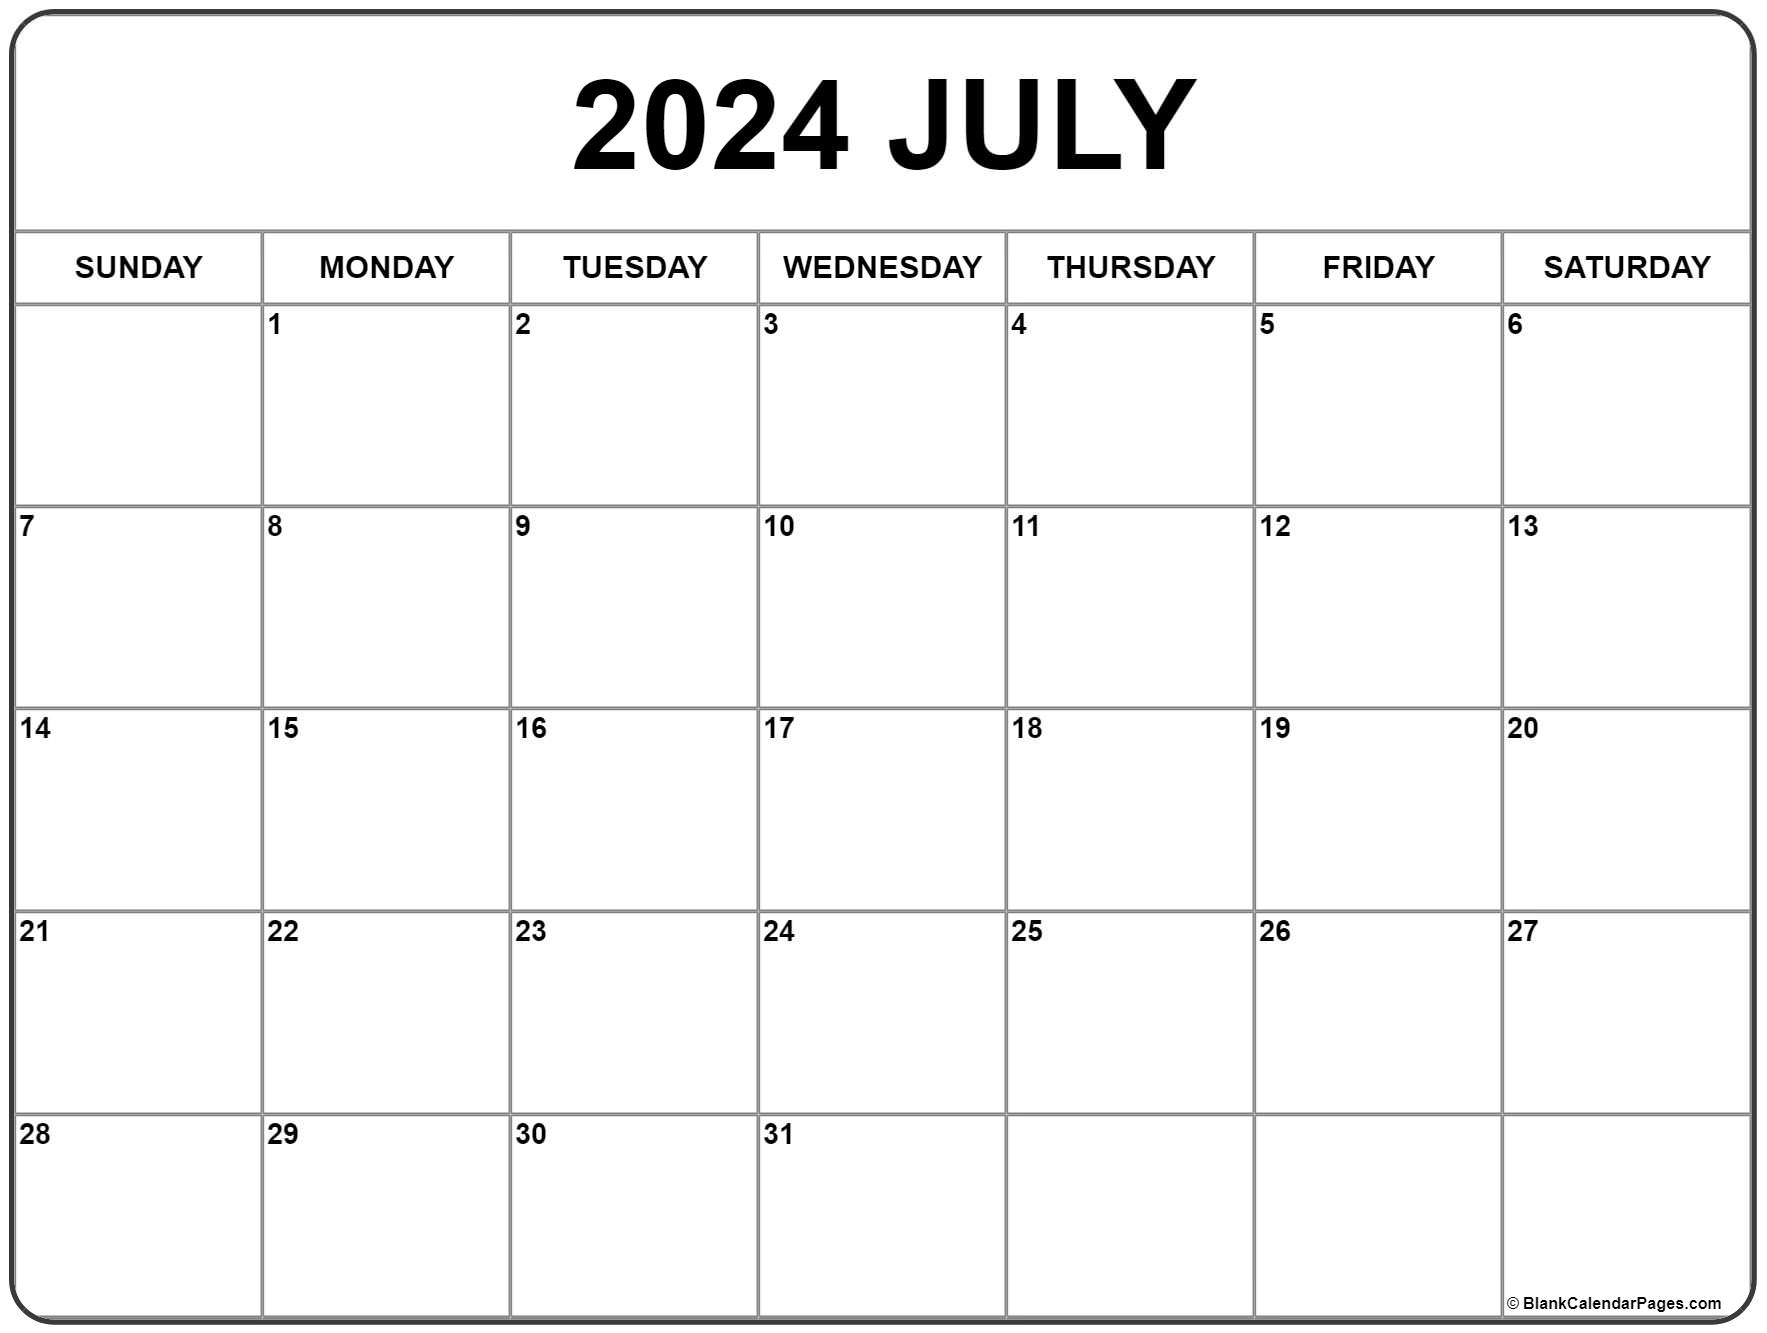 July 2024 Calendar | Free Printable Calendar with Blank Calendar 2024 July